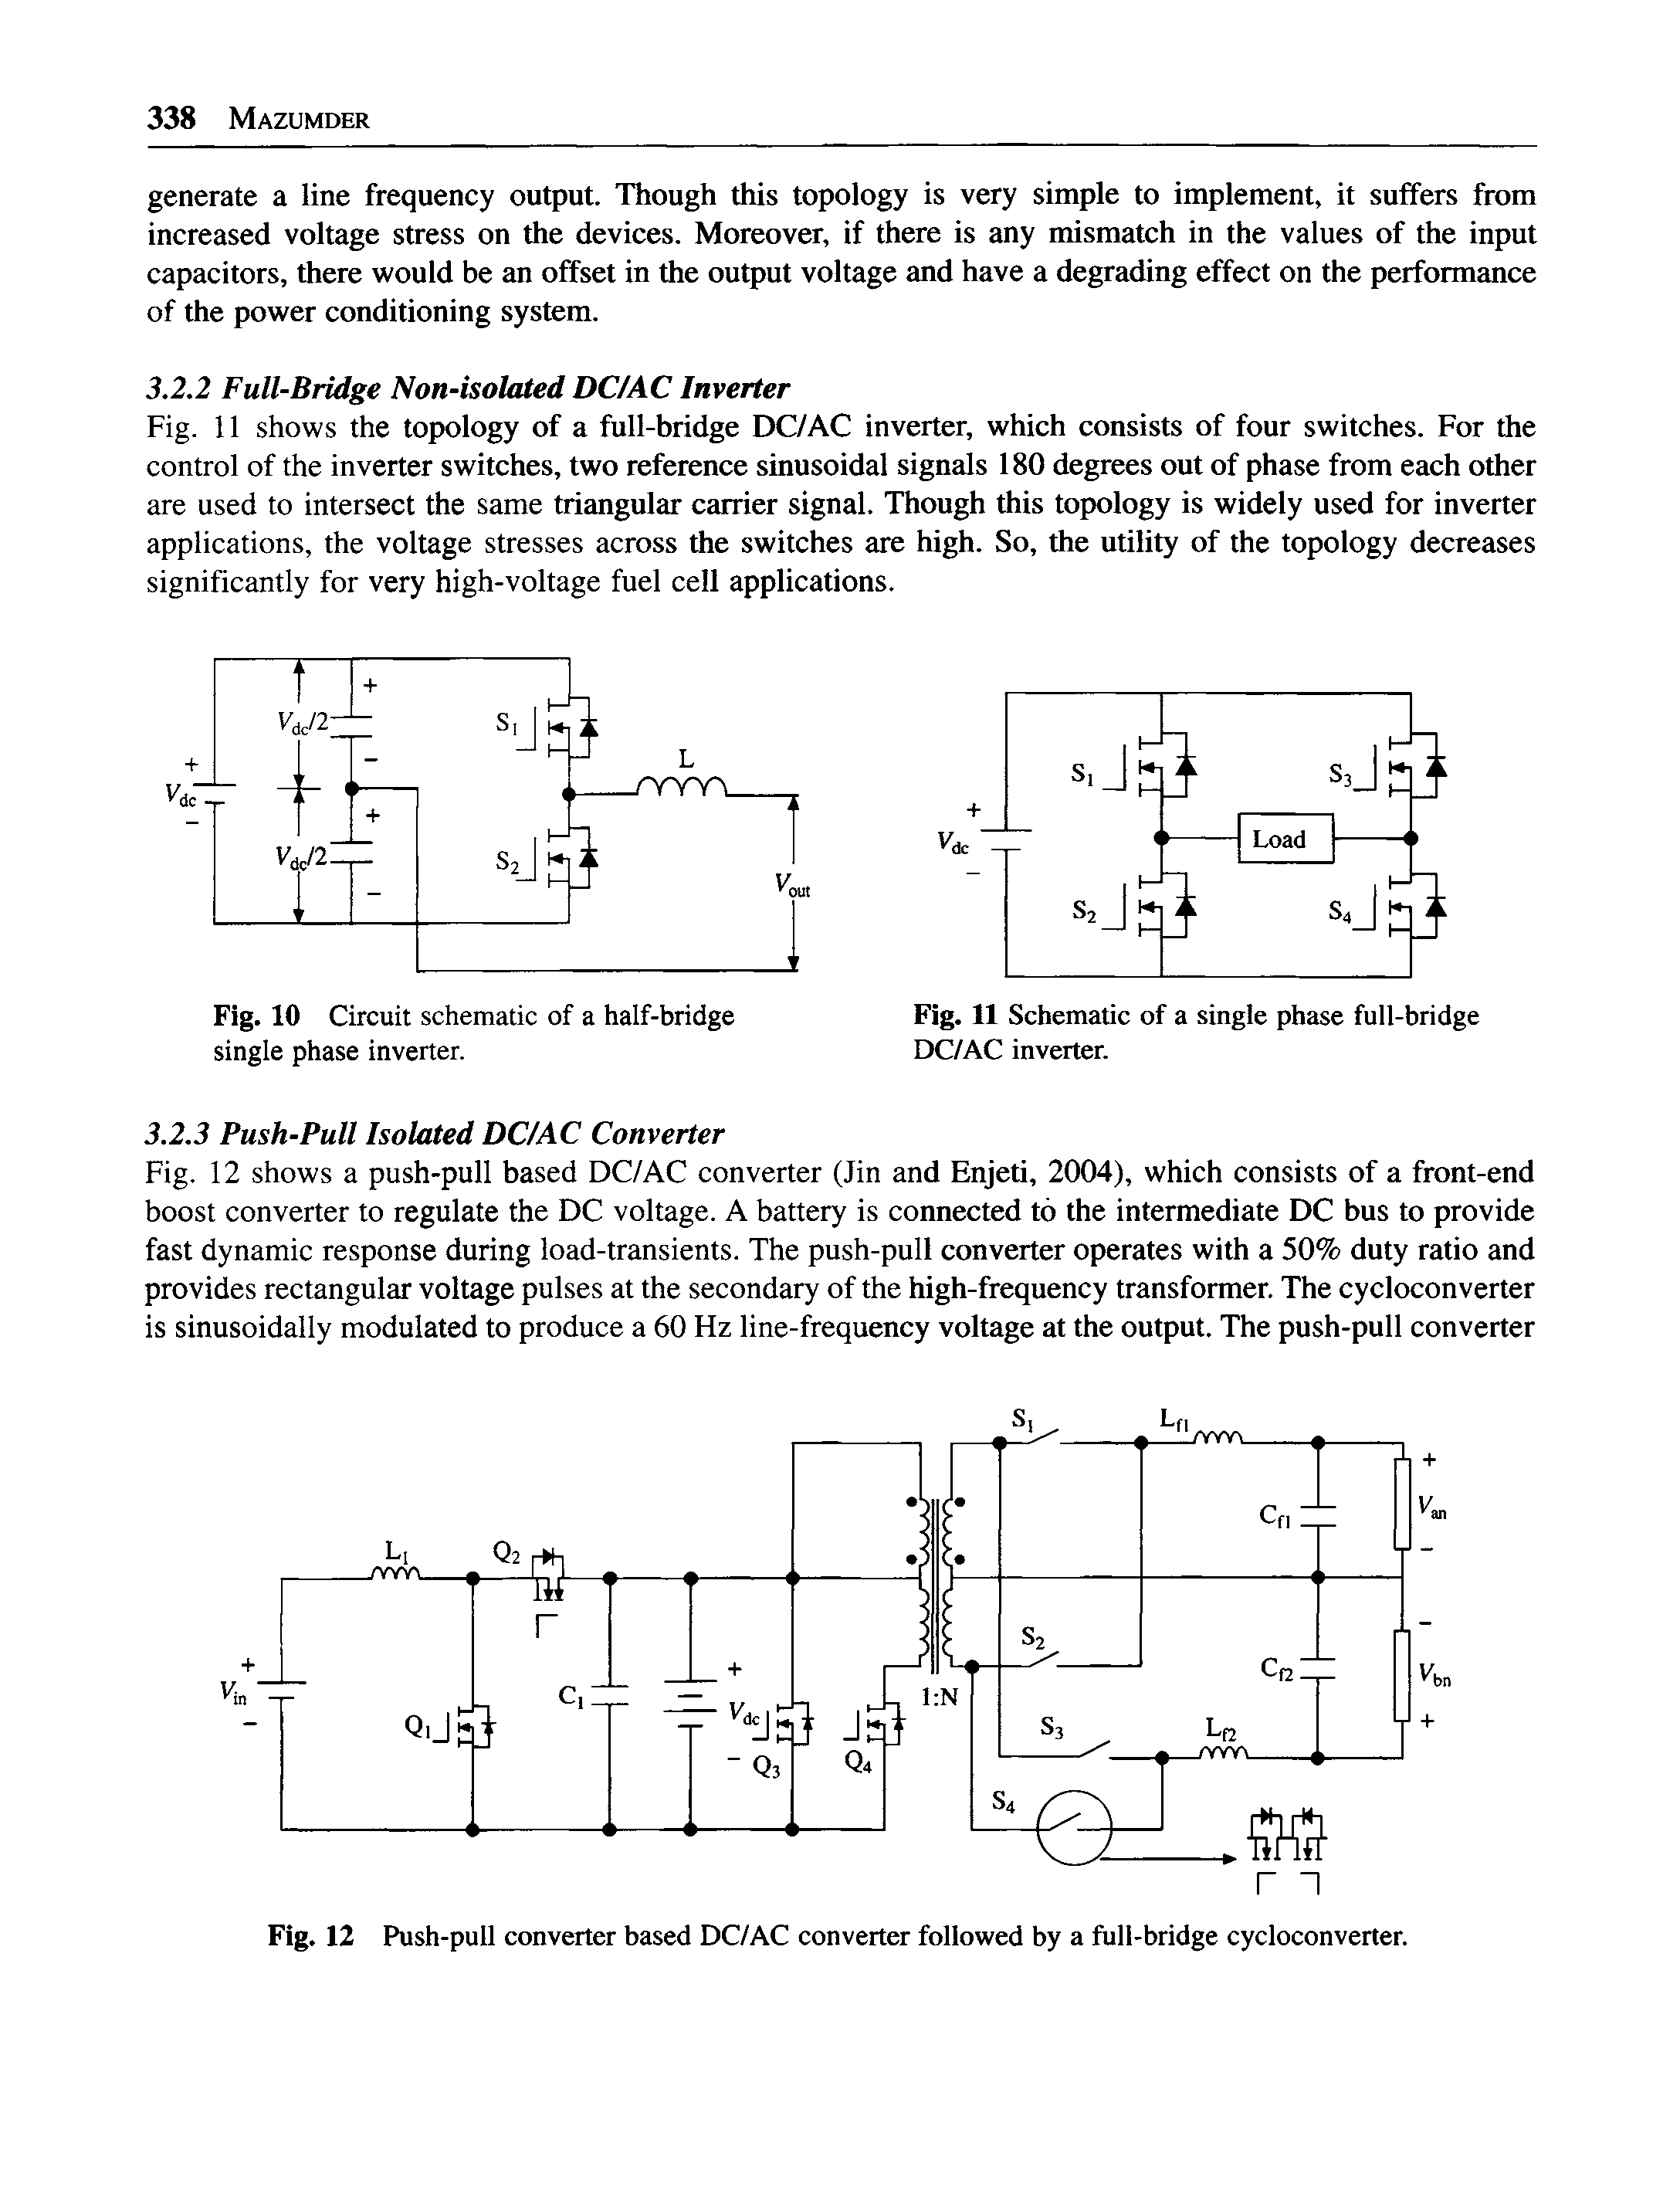 Fig. 10 Circuit schematic of a half-bridge single phase inverter.